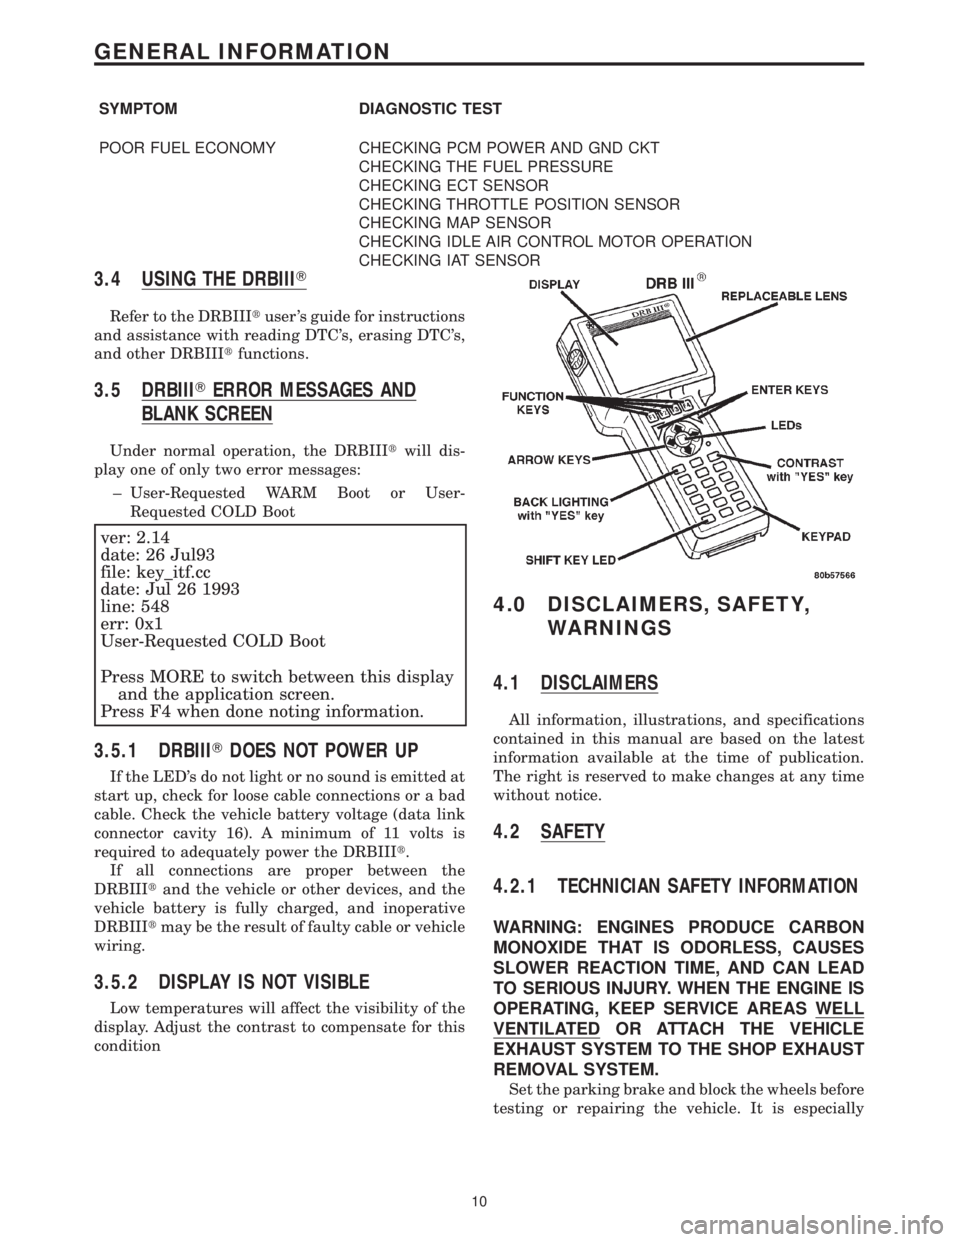 CHRYSLER VOYAGER 2001  Service Manual SYMPTOM DIAGNOSTIC TEST
POOR FUEL ECONOMY CHECKING PCM POWER AND GND CKT
CHECKING THE FUEL PRESSURE
CHECKING ECT SENSOR
CHECKING THROTTLE POSITION SENSOR
CHECKING MAP SENSOR
CHECKING IDLE AIR CONTROL 